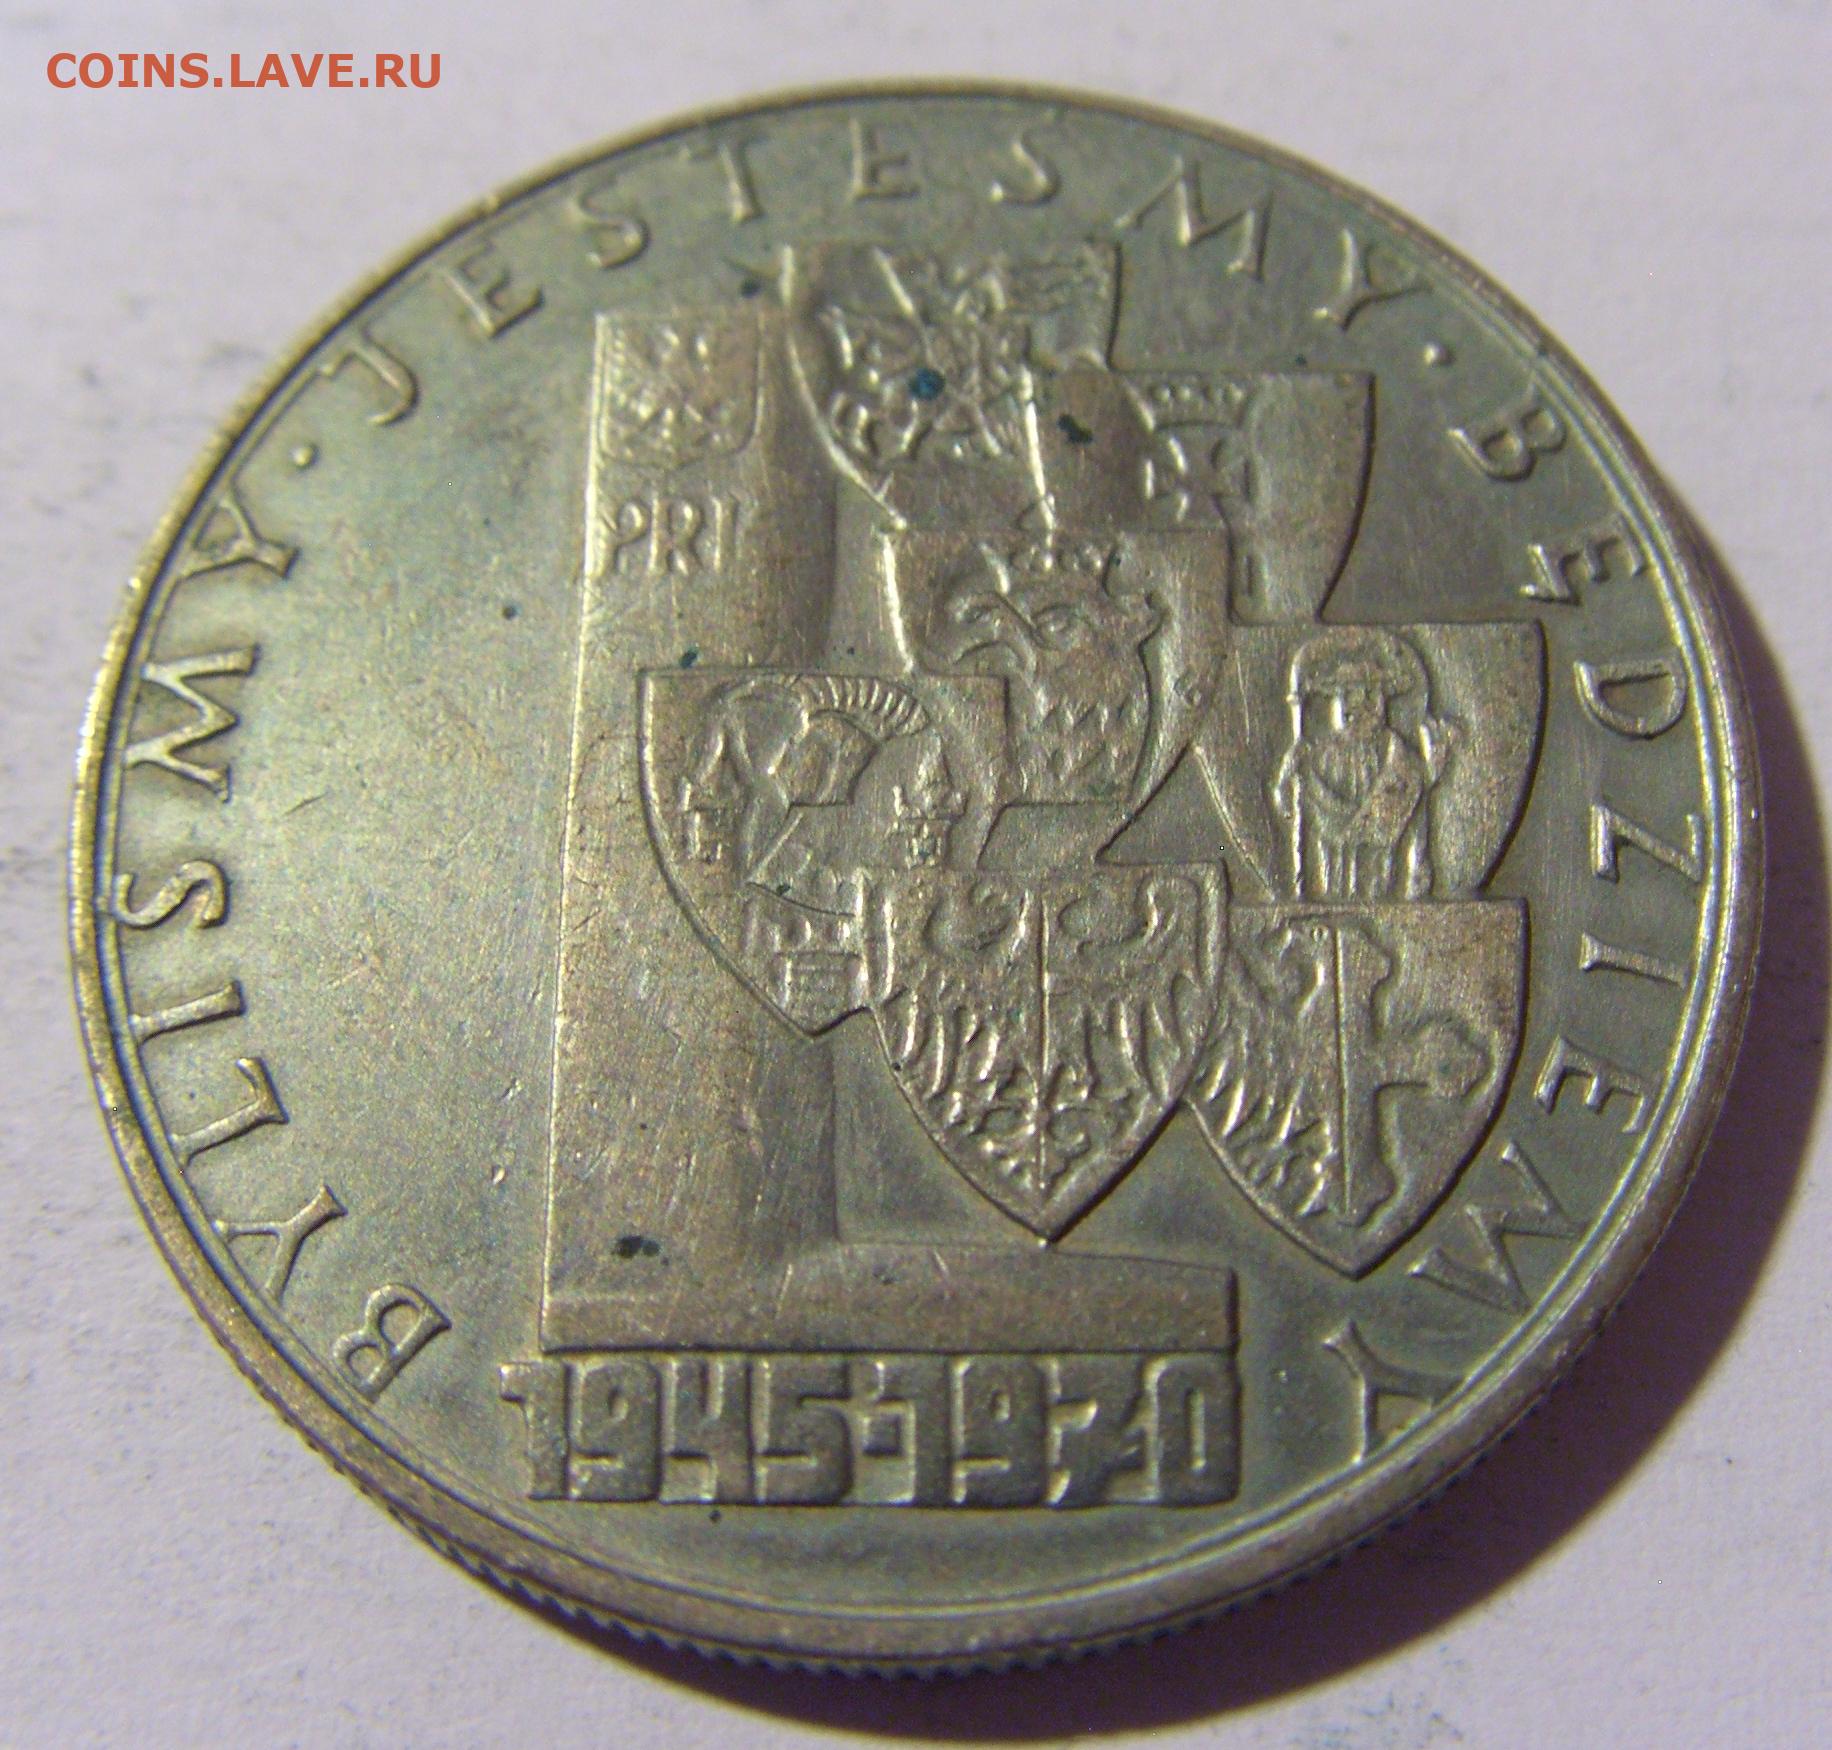 120 млн польских злотых. Польша 10 злотых 1970. Польский злотый 1970 1 монета. Польский злотый 2022. Десять злотых монета.